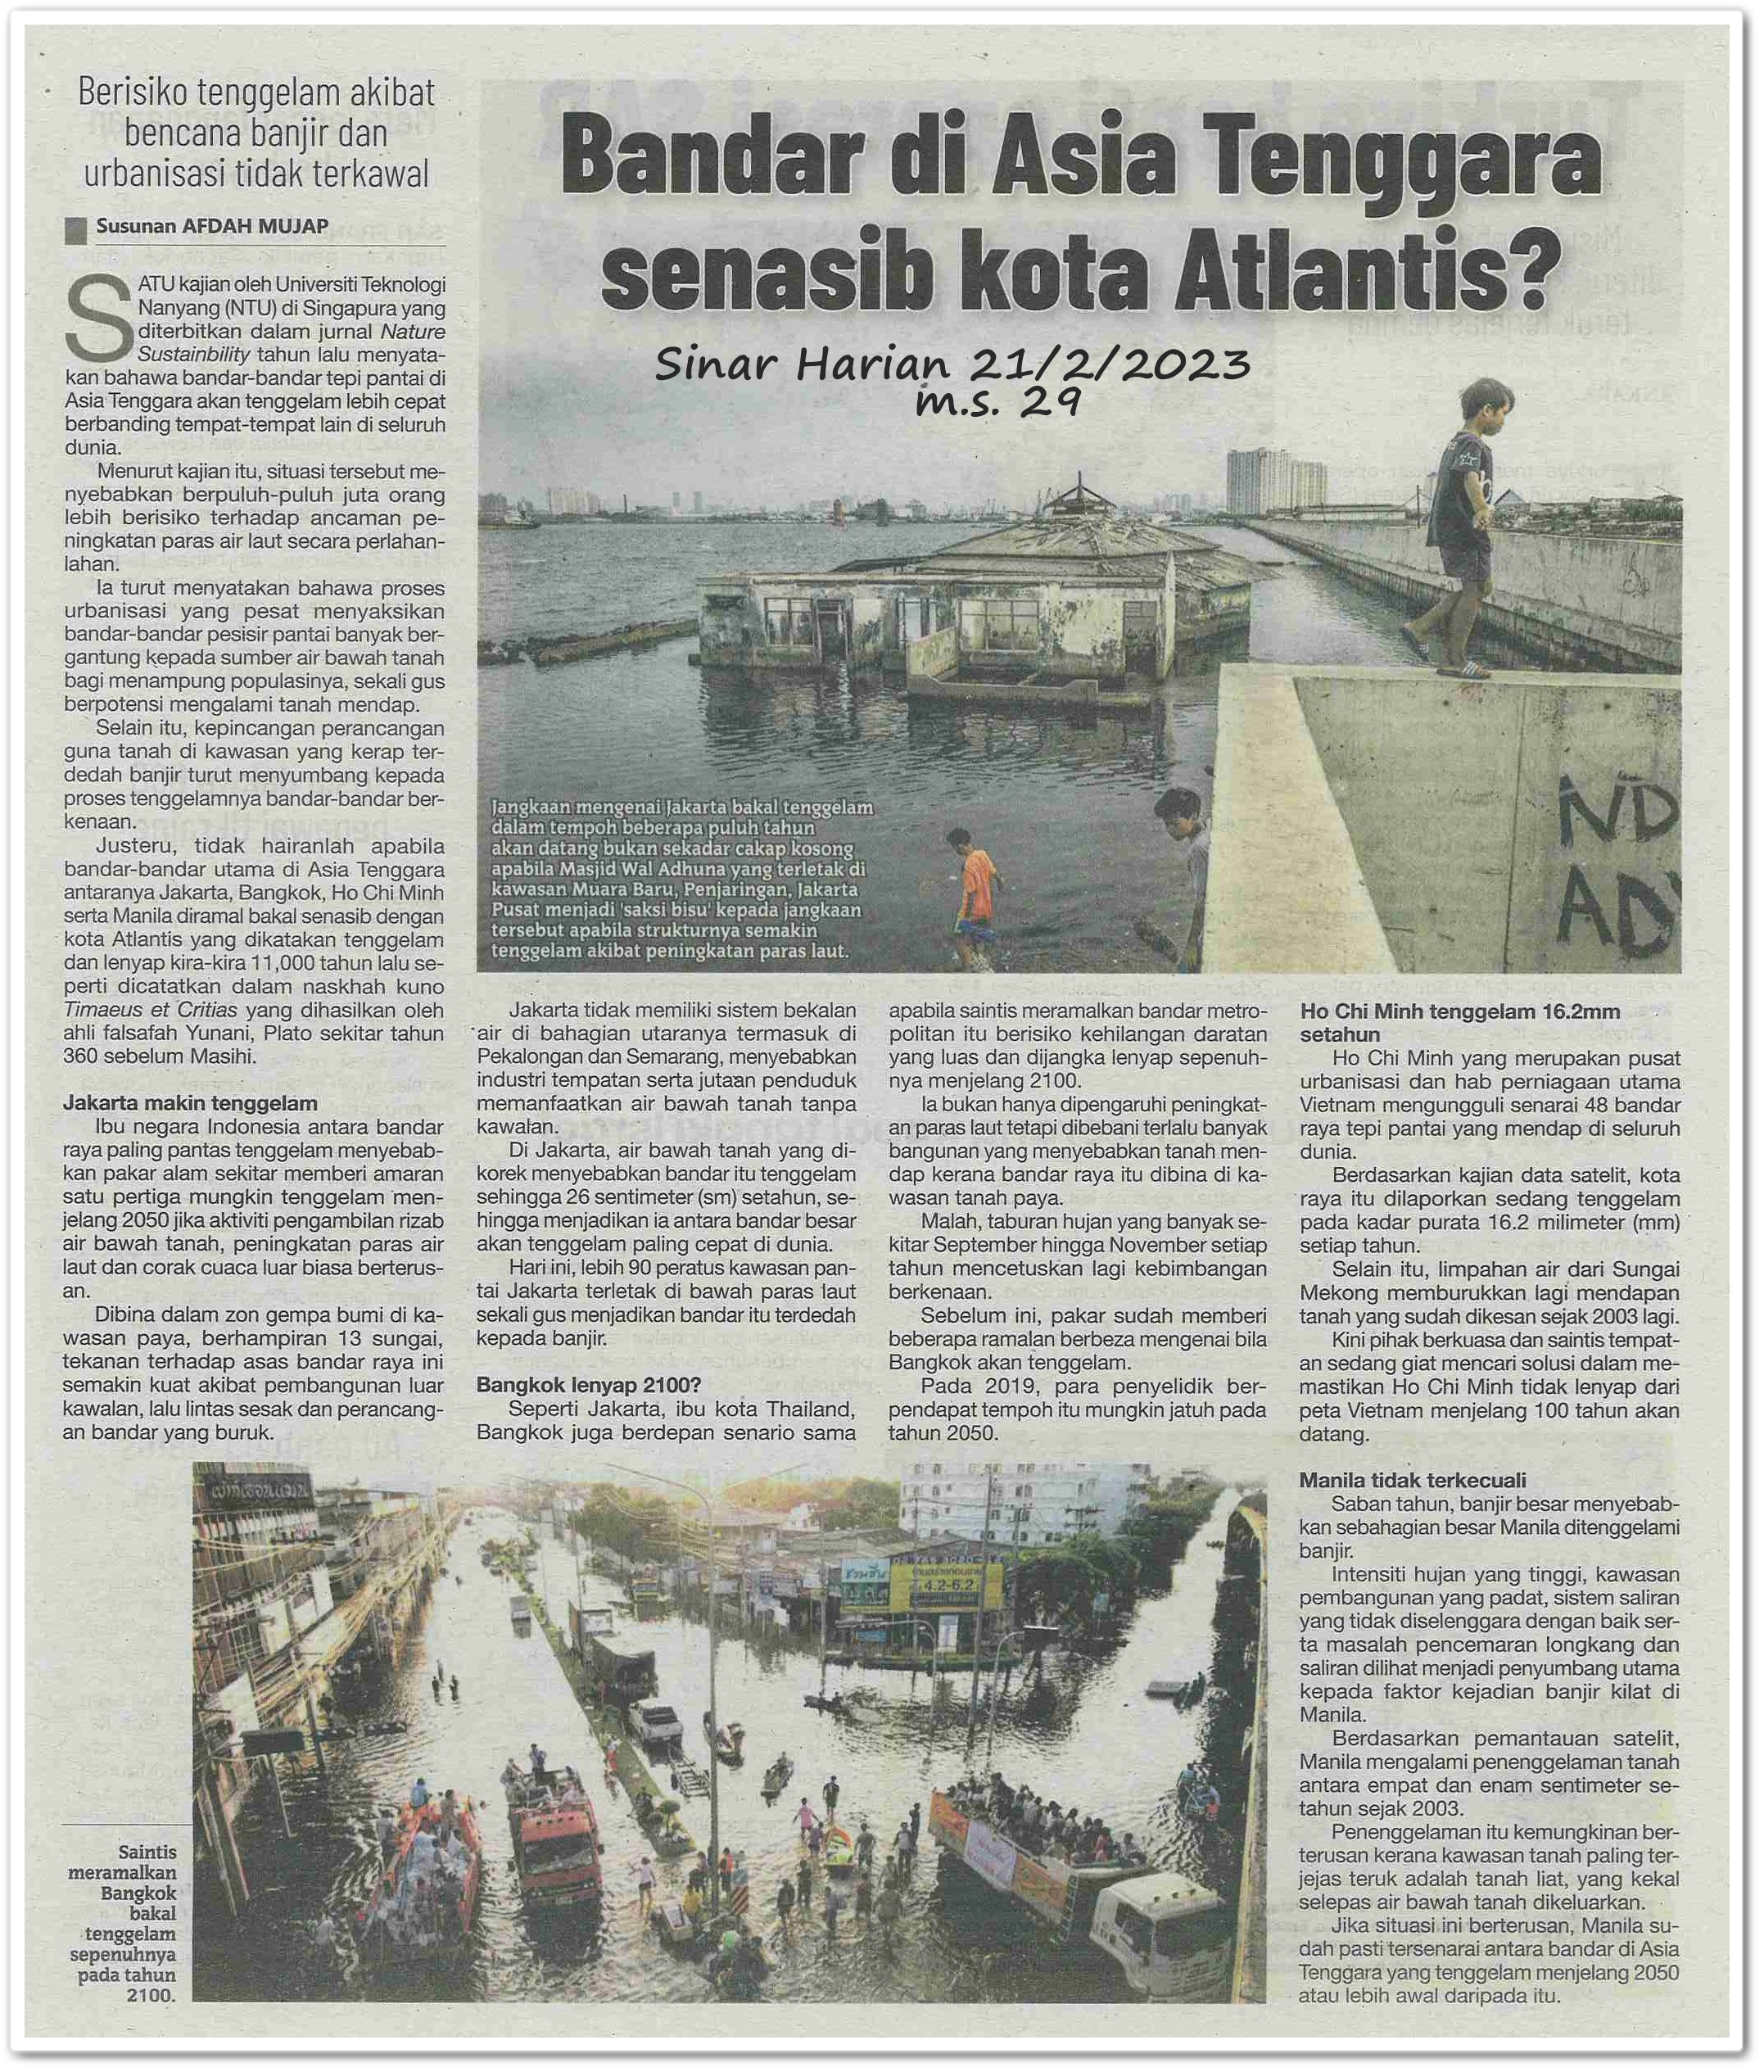 Bandar di Asia Tenggara senasib kota Atlantis? ; Berisiko tenggelam akibat bencana banjir dan urbanisasi tidak terkawal - Keratan akhbar Sinar Harian 21 Februari 2023